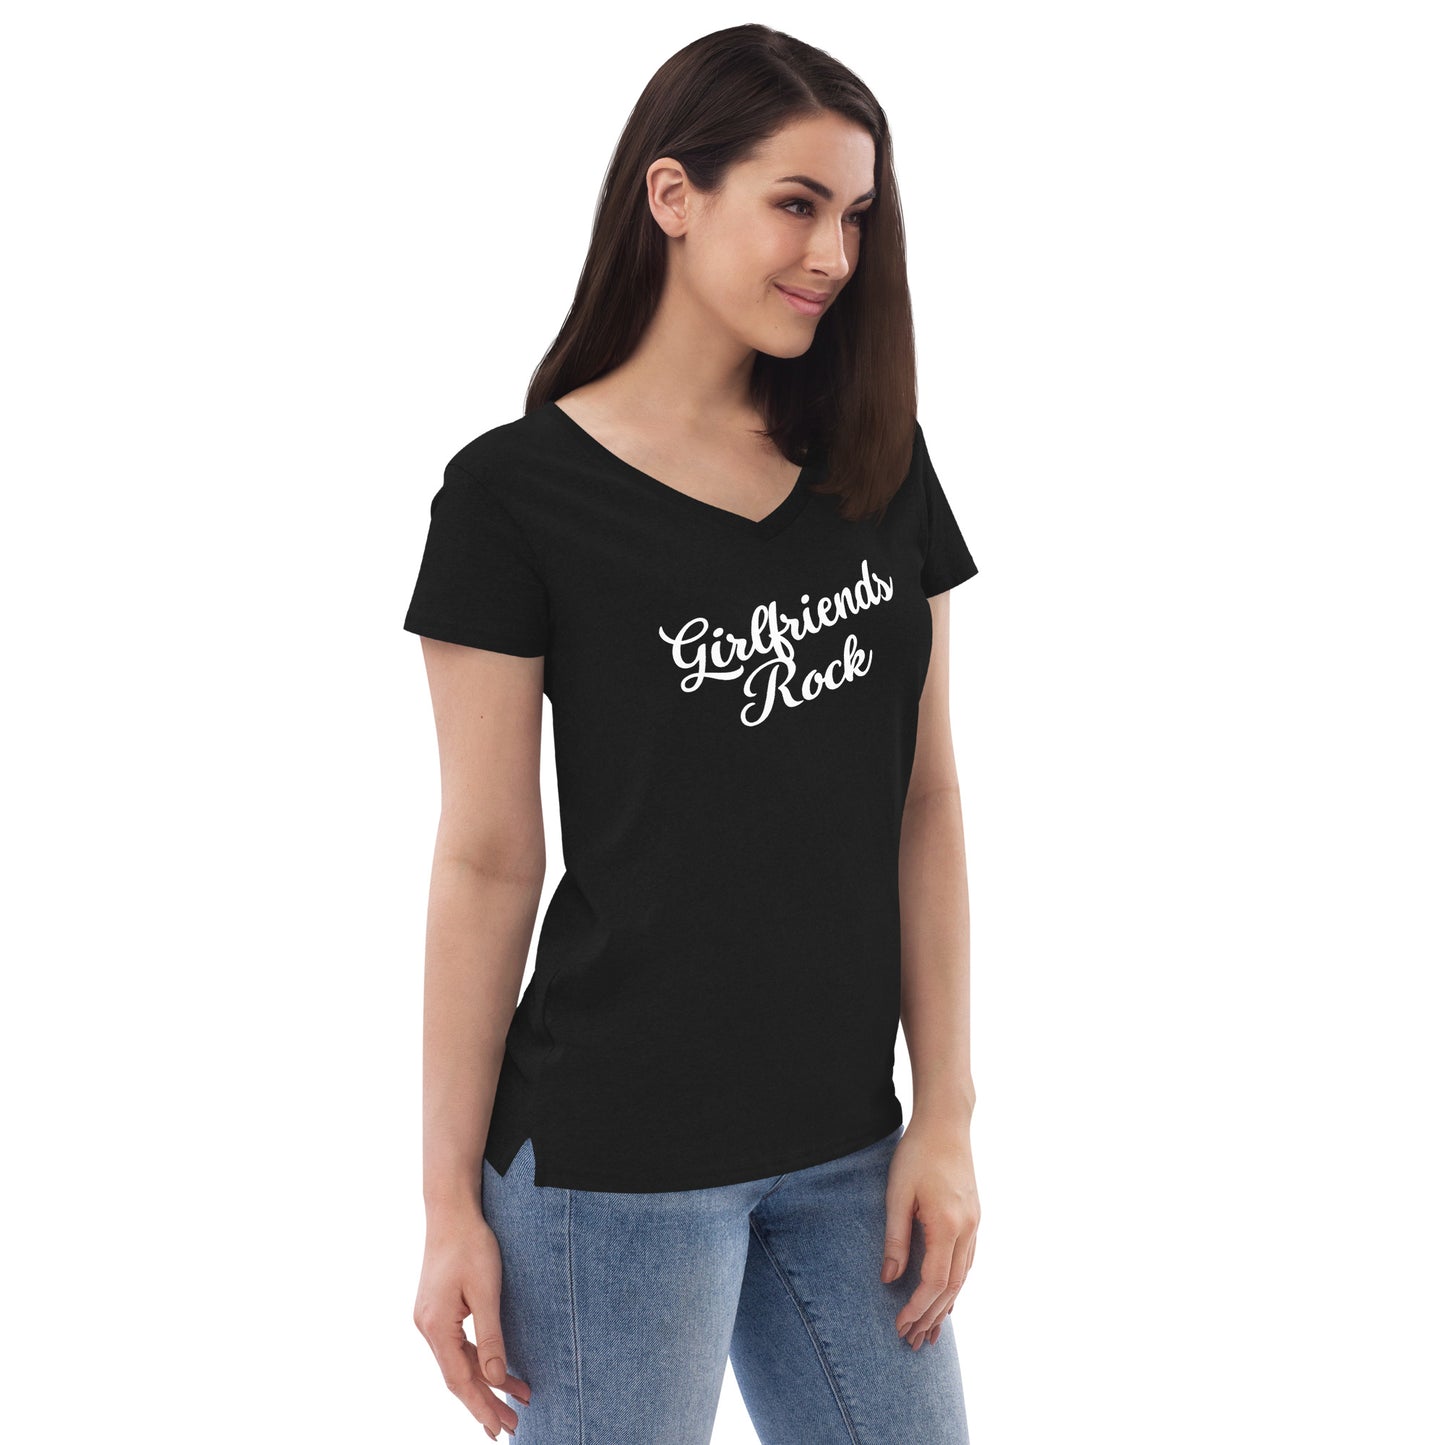 Girlfriends Rock - Women’s Recycled V-Neck T-Shirt